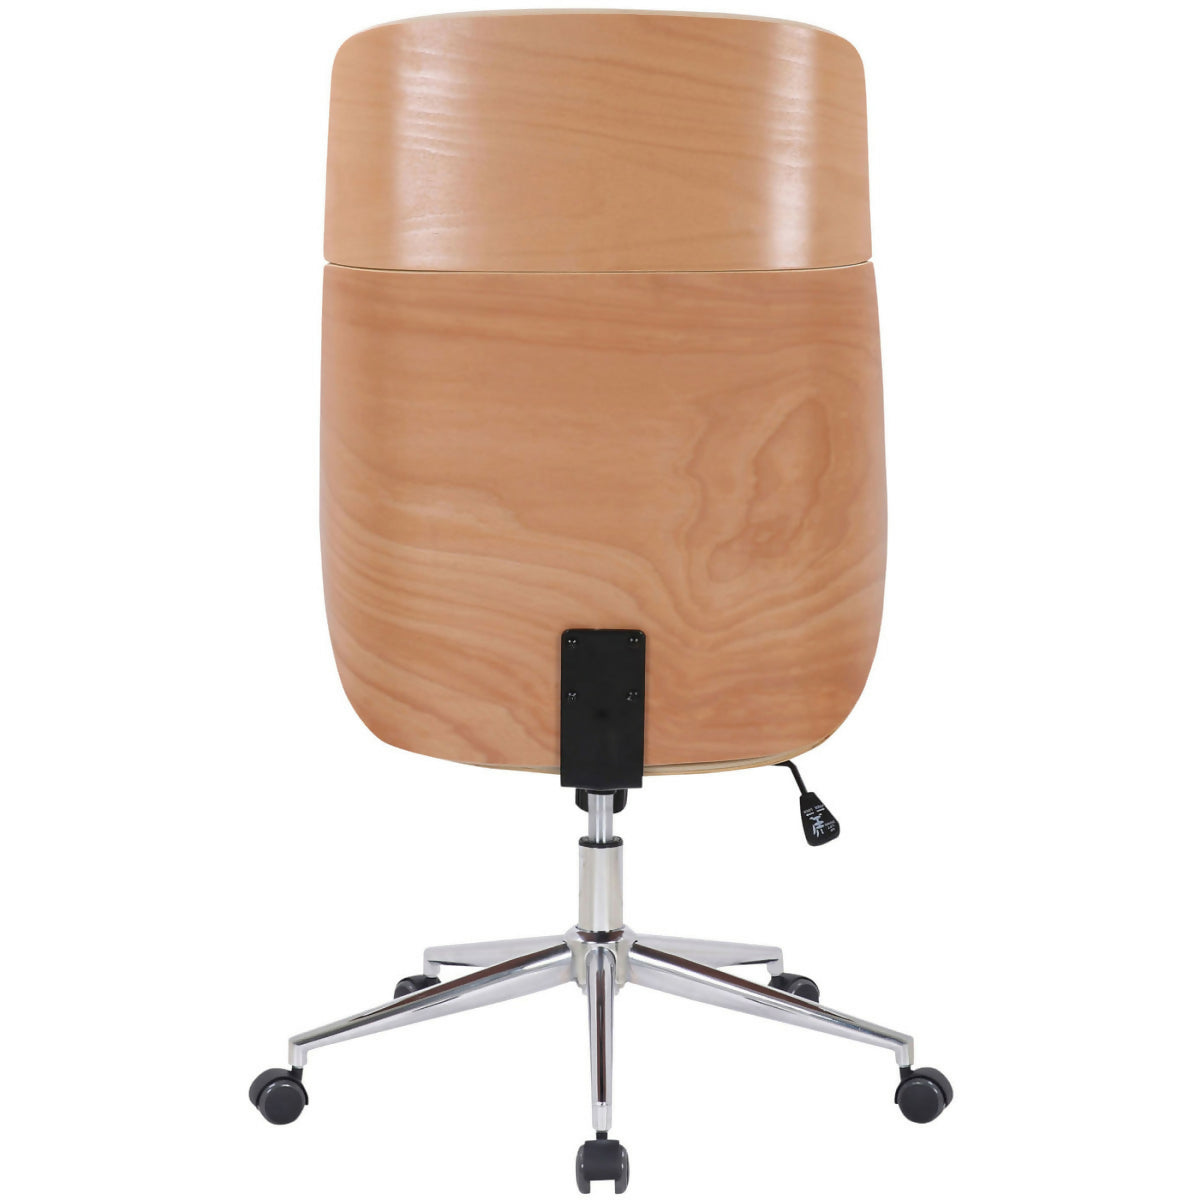 Varel office armchair - Natural wood - Cream